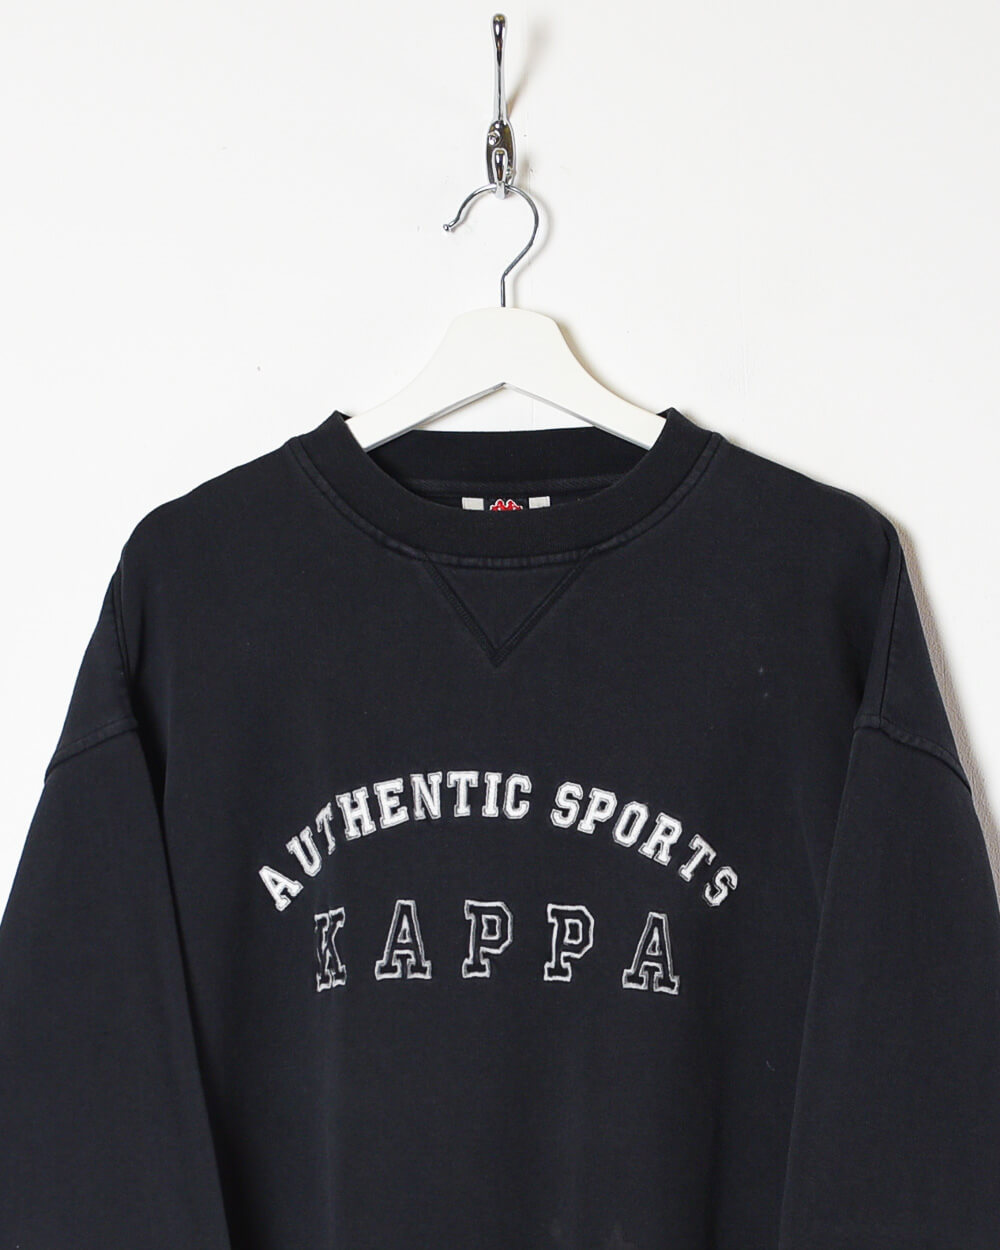 Black Kappa Authentic Sports Sweatshirt - X-Large